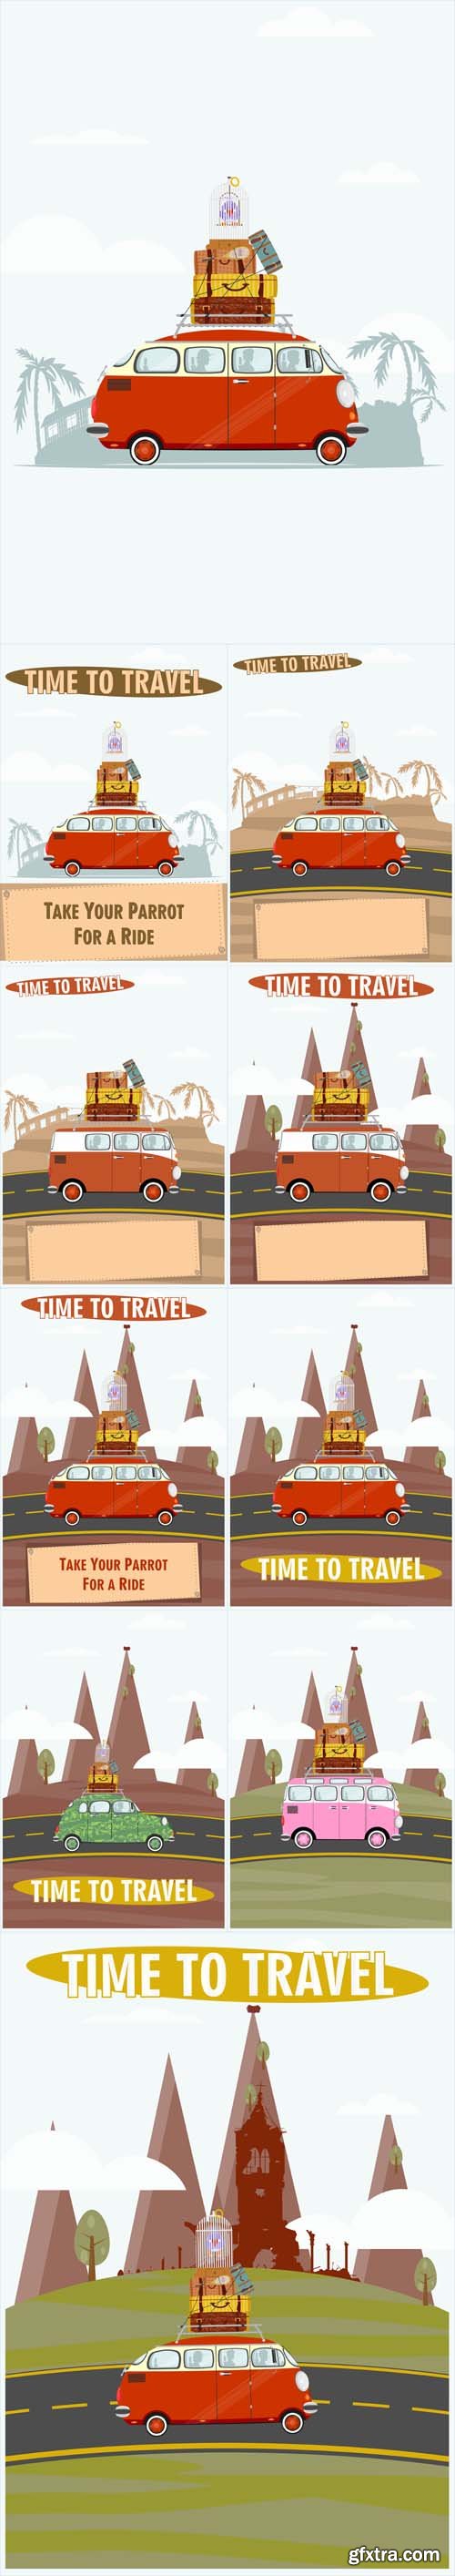 Vector Set - Time to Travel Illustration of an Old Car on a Landscape Background